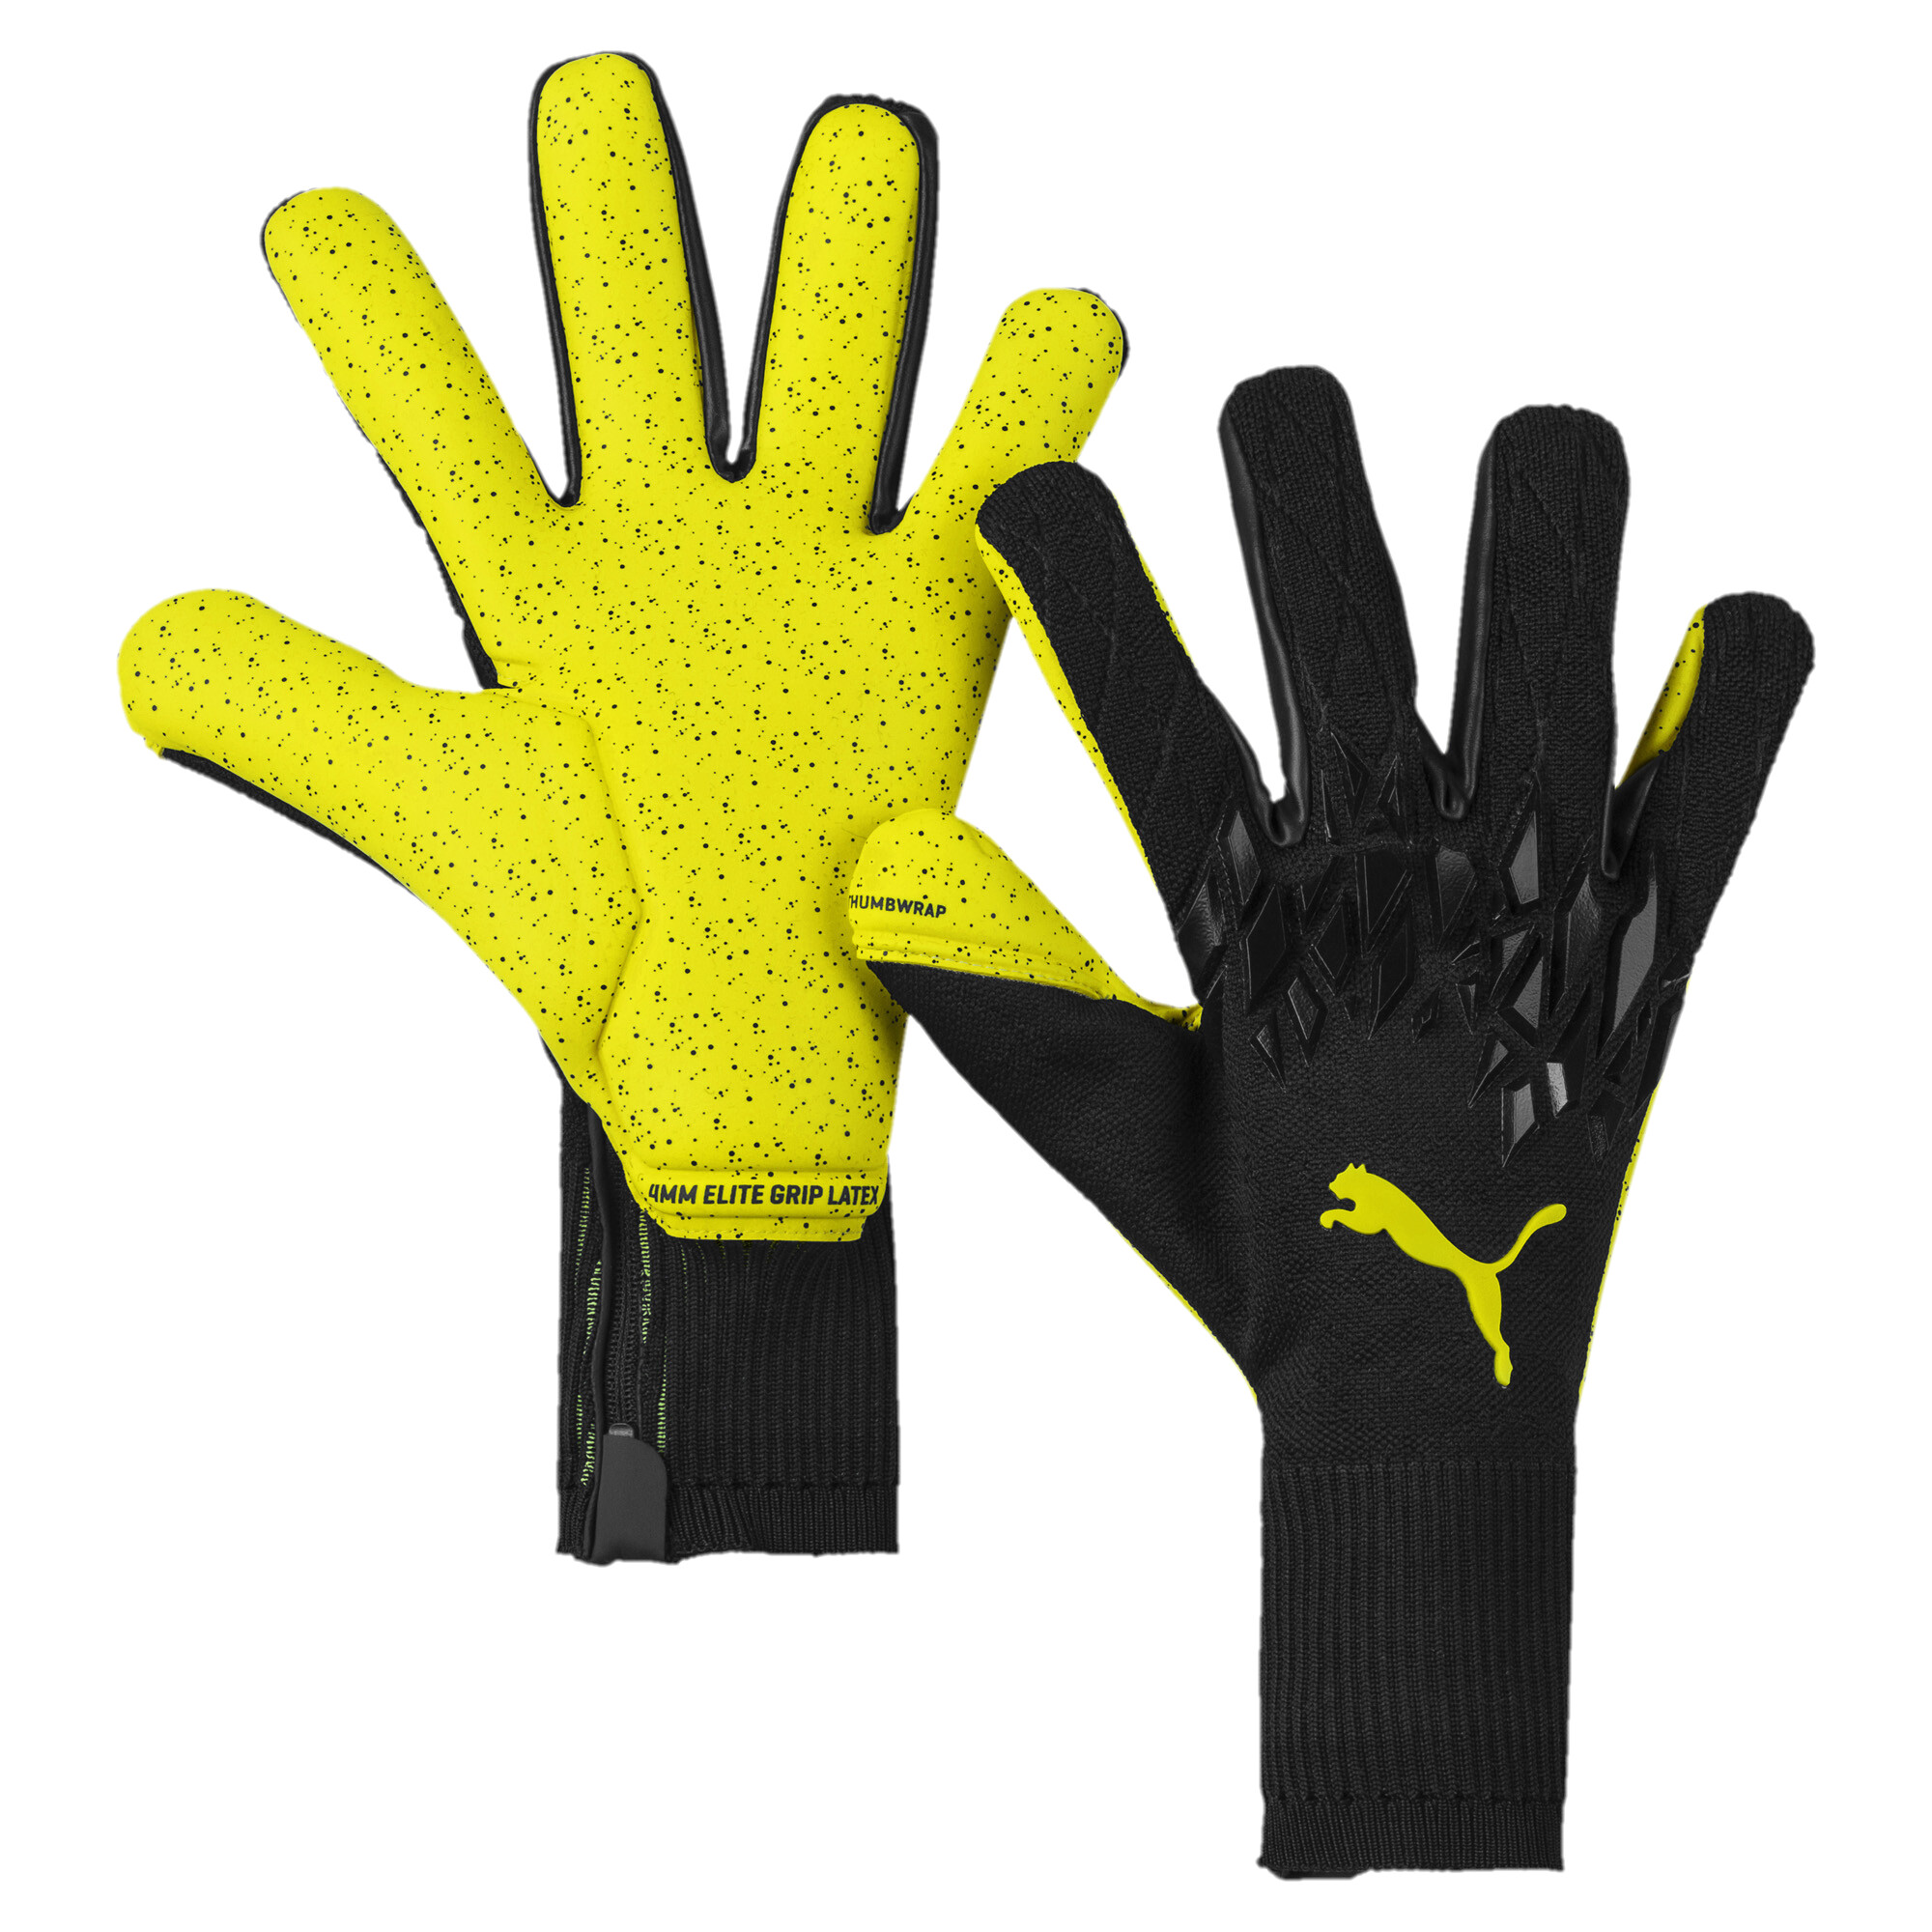 Puma FUTURE Grip 19.1 Football Goalkeeper Gloves, Black, Size 8, Accessories